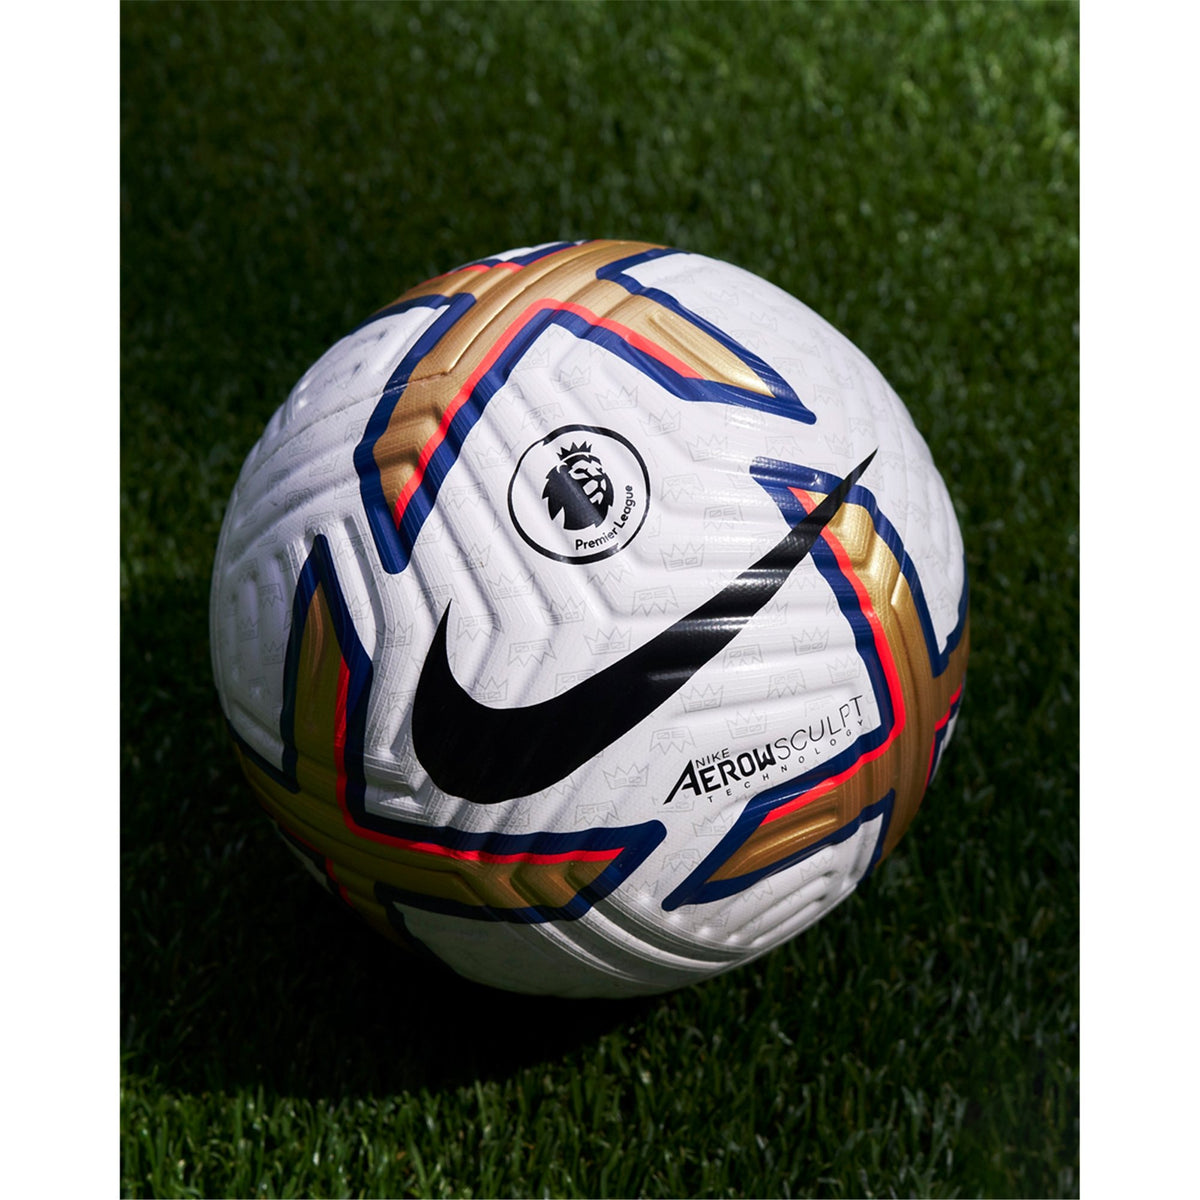 Nike Flight Official Match Ball 2022/2023 FA22 Promo Aerowsculpt FIFA Pro